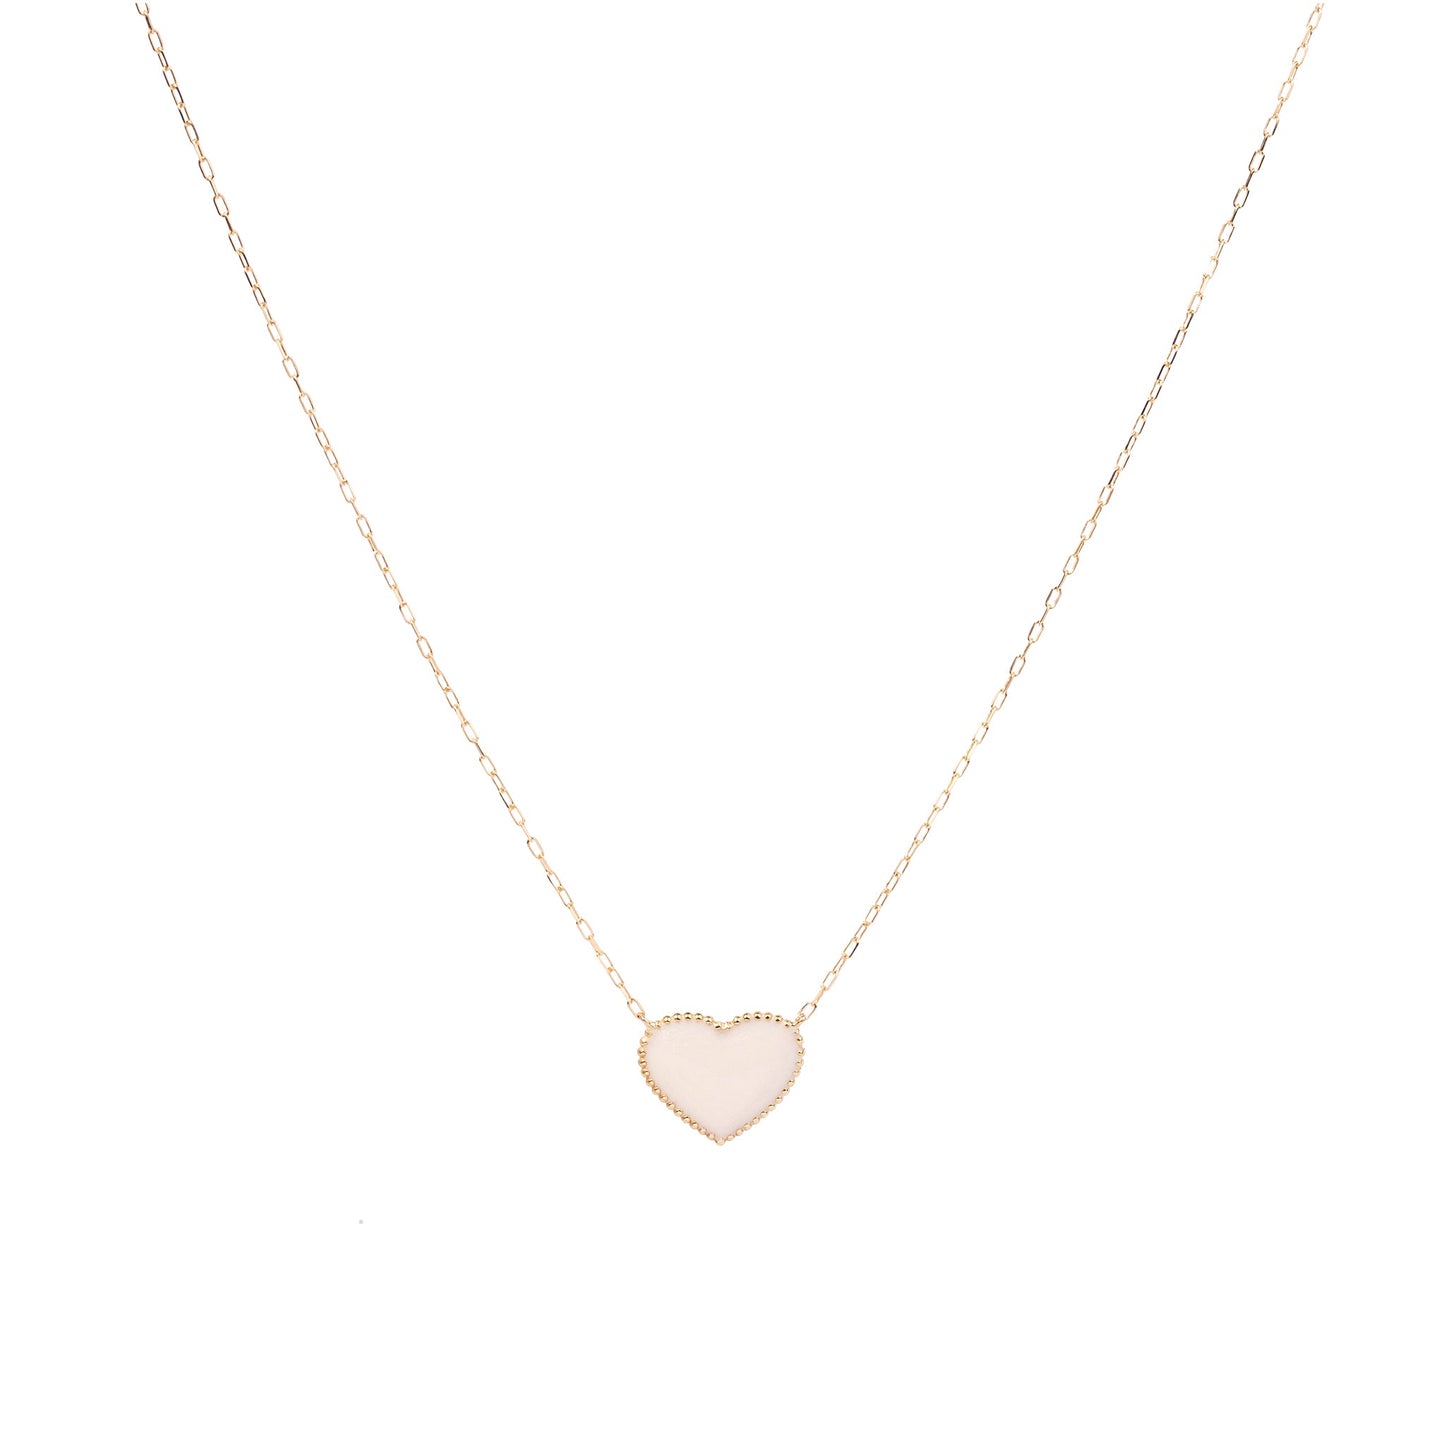 The White Enamel heart necklace - Oria.jewelry